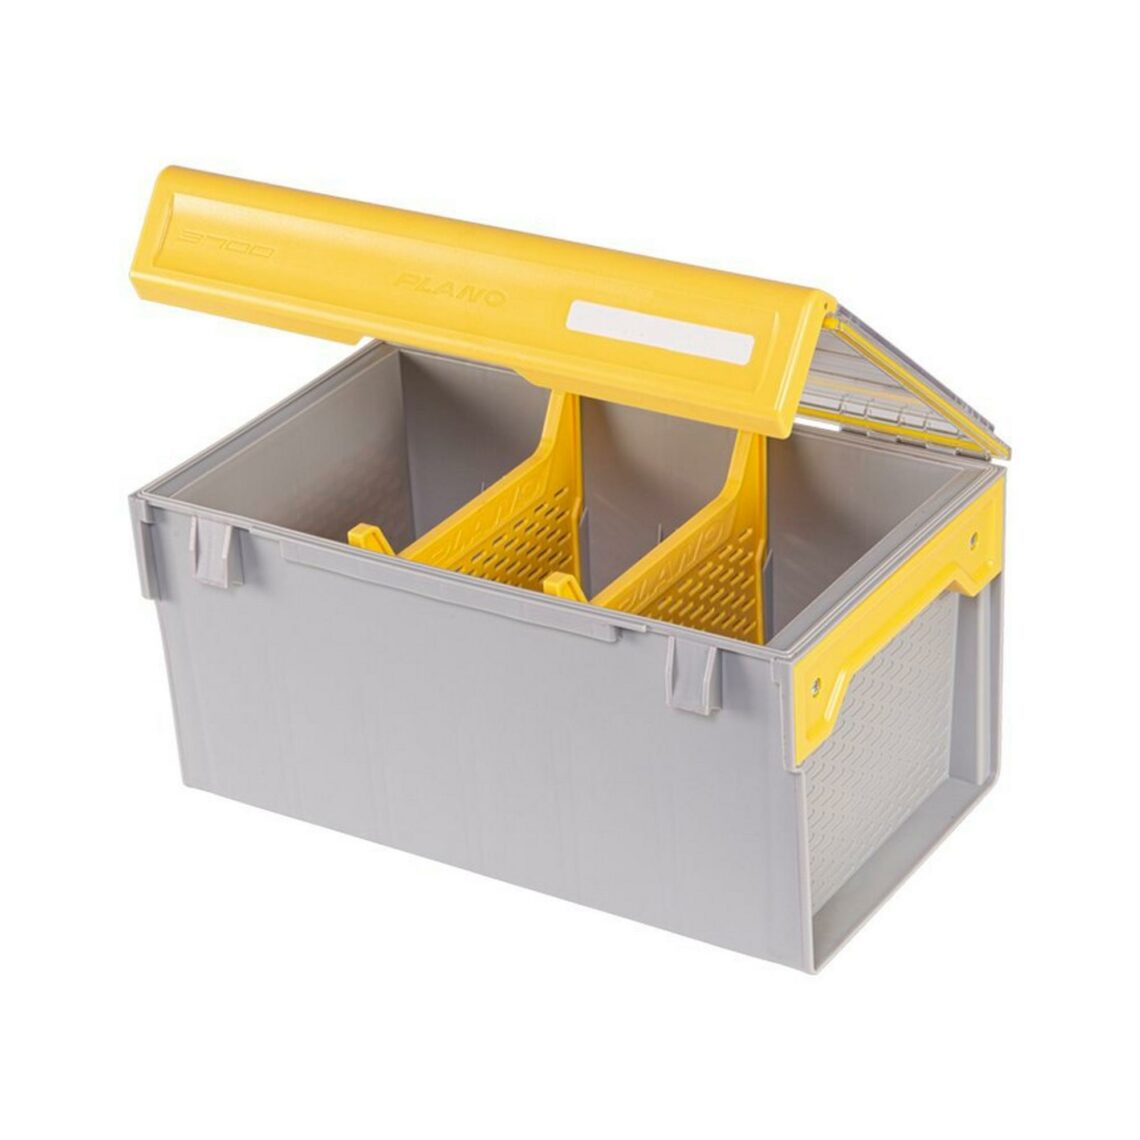 Plano EDGE™ Soft Plastics and Utility Box open